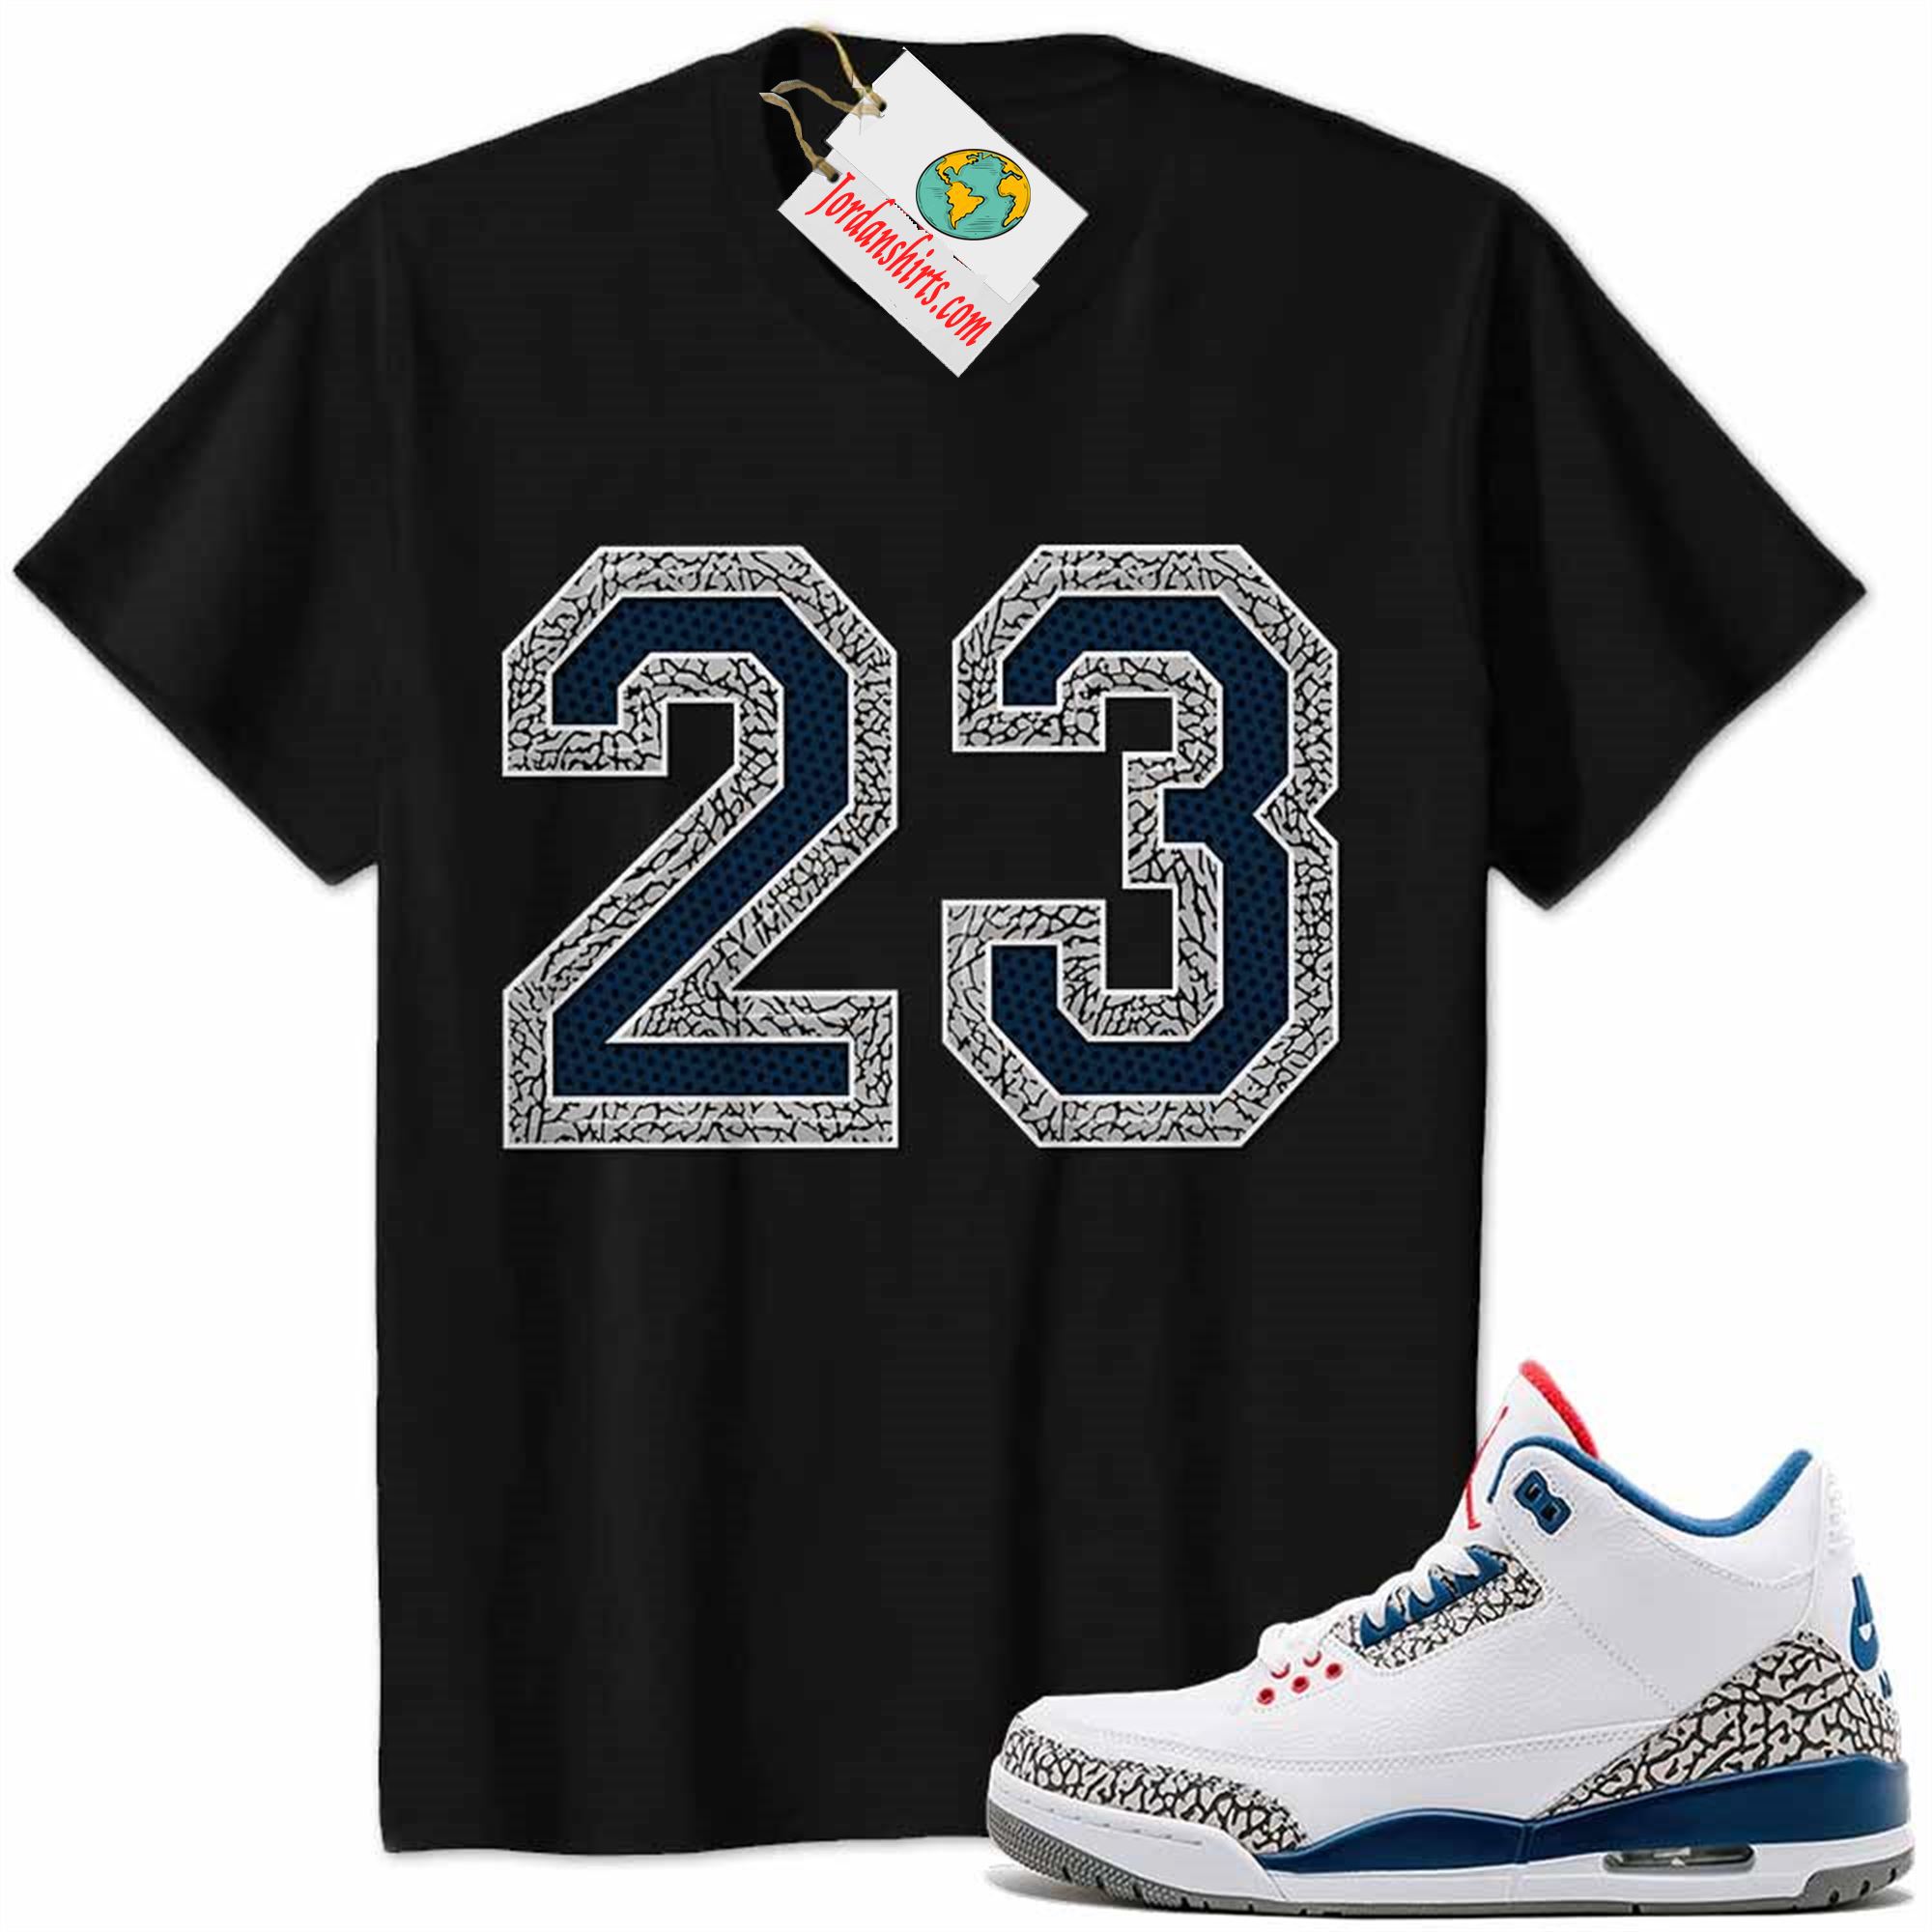 Jordan 3 Shirt, Jordan 3 True Blue Shirt Michael Jordan Number 23 Black Full Size Up To 5xl